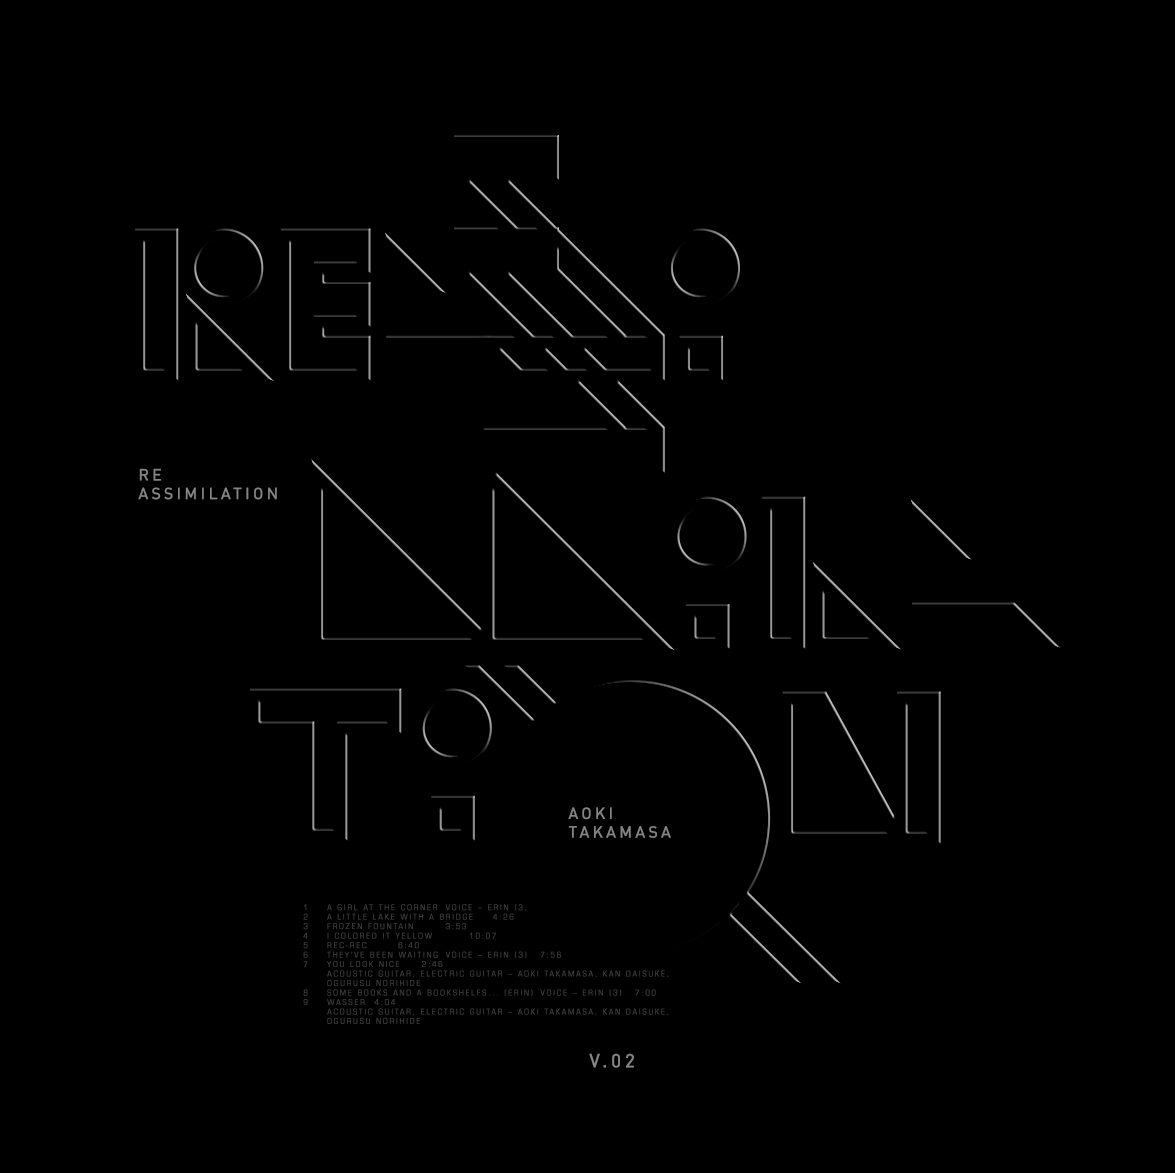 album art cover black and white Aoki Takamasa geometry Angles